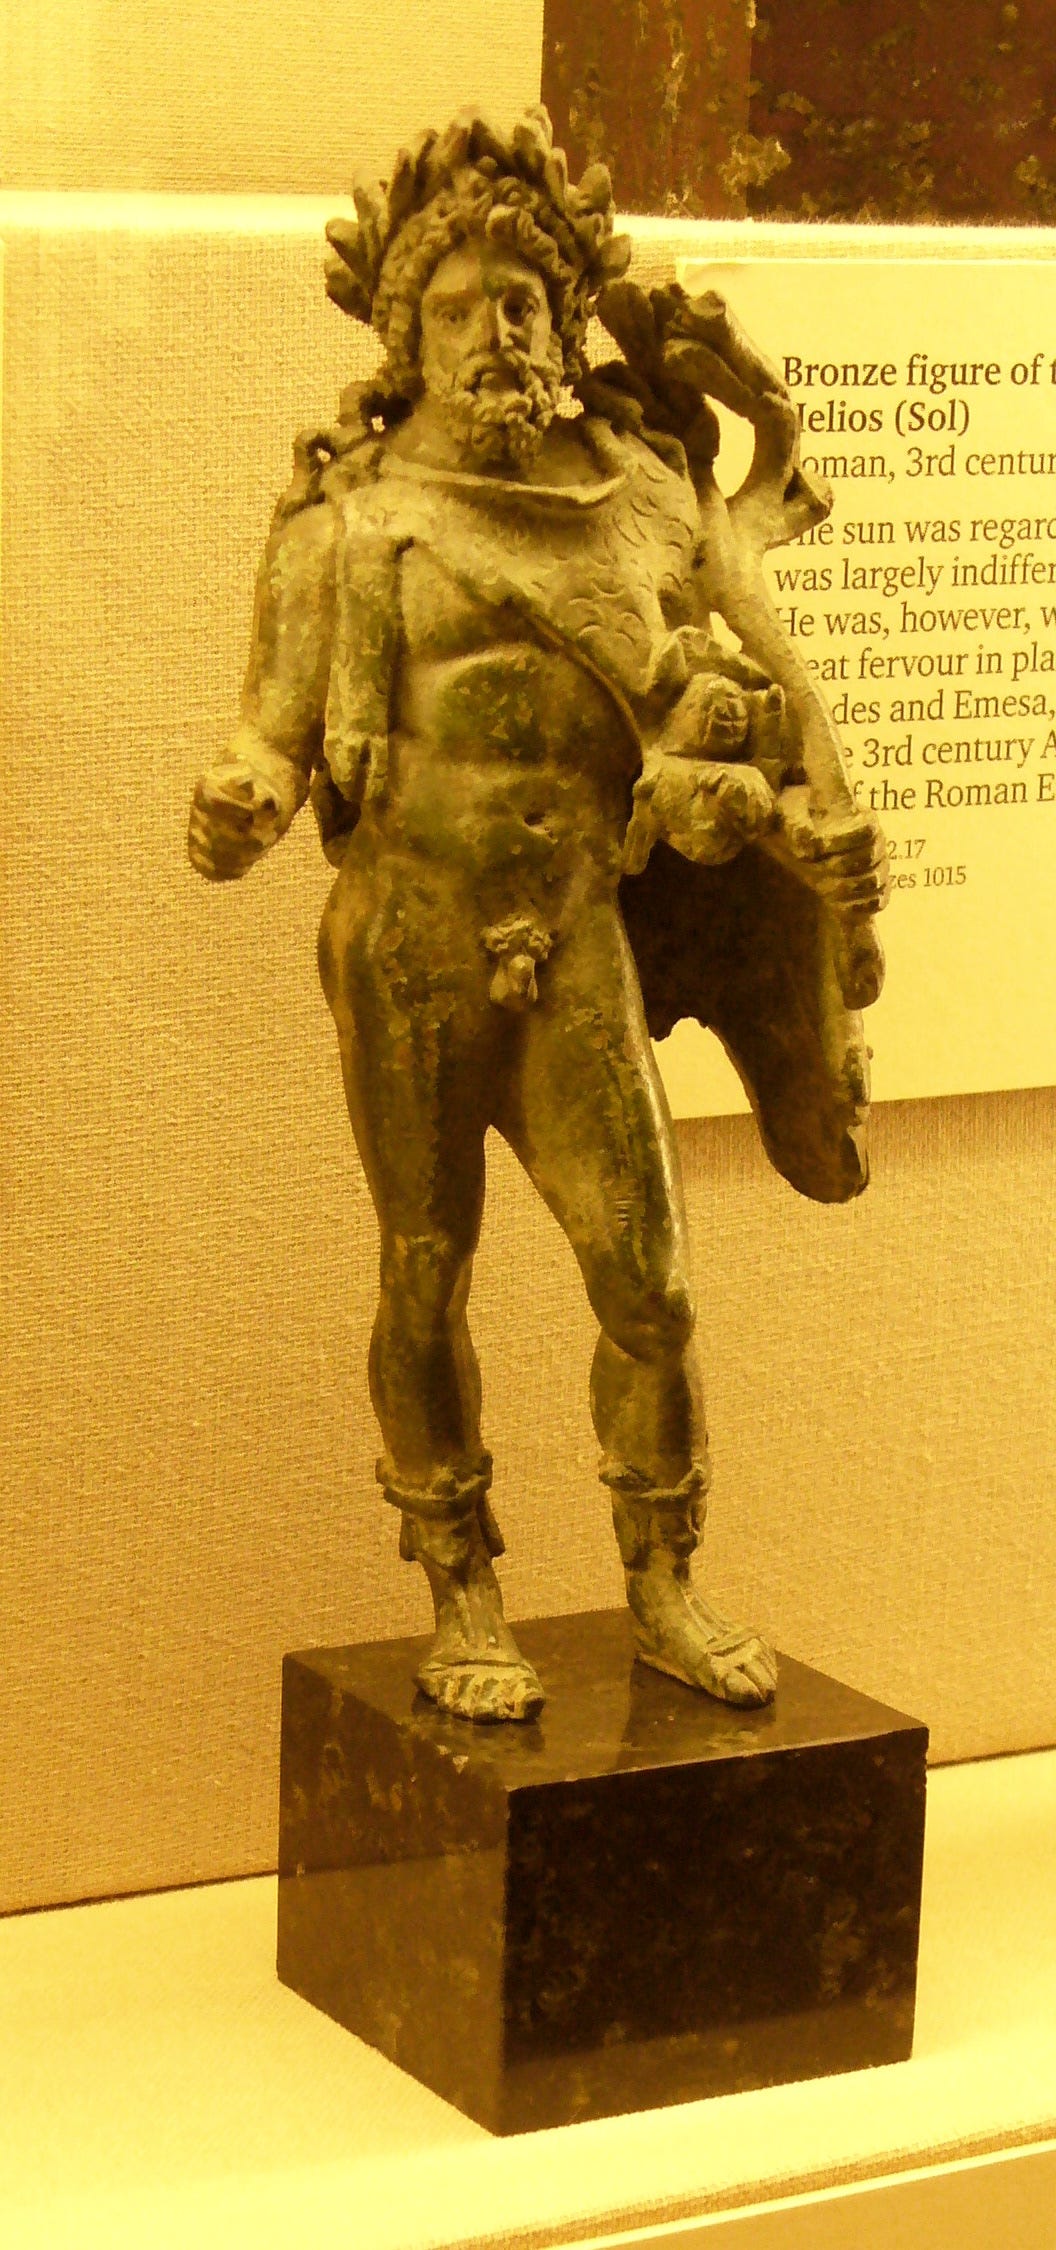 A statue of the Roman God Sylvanus.